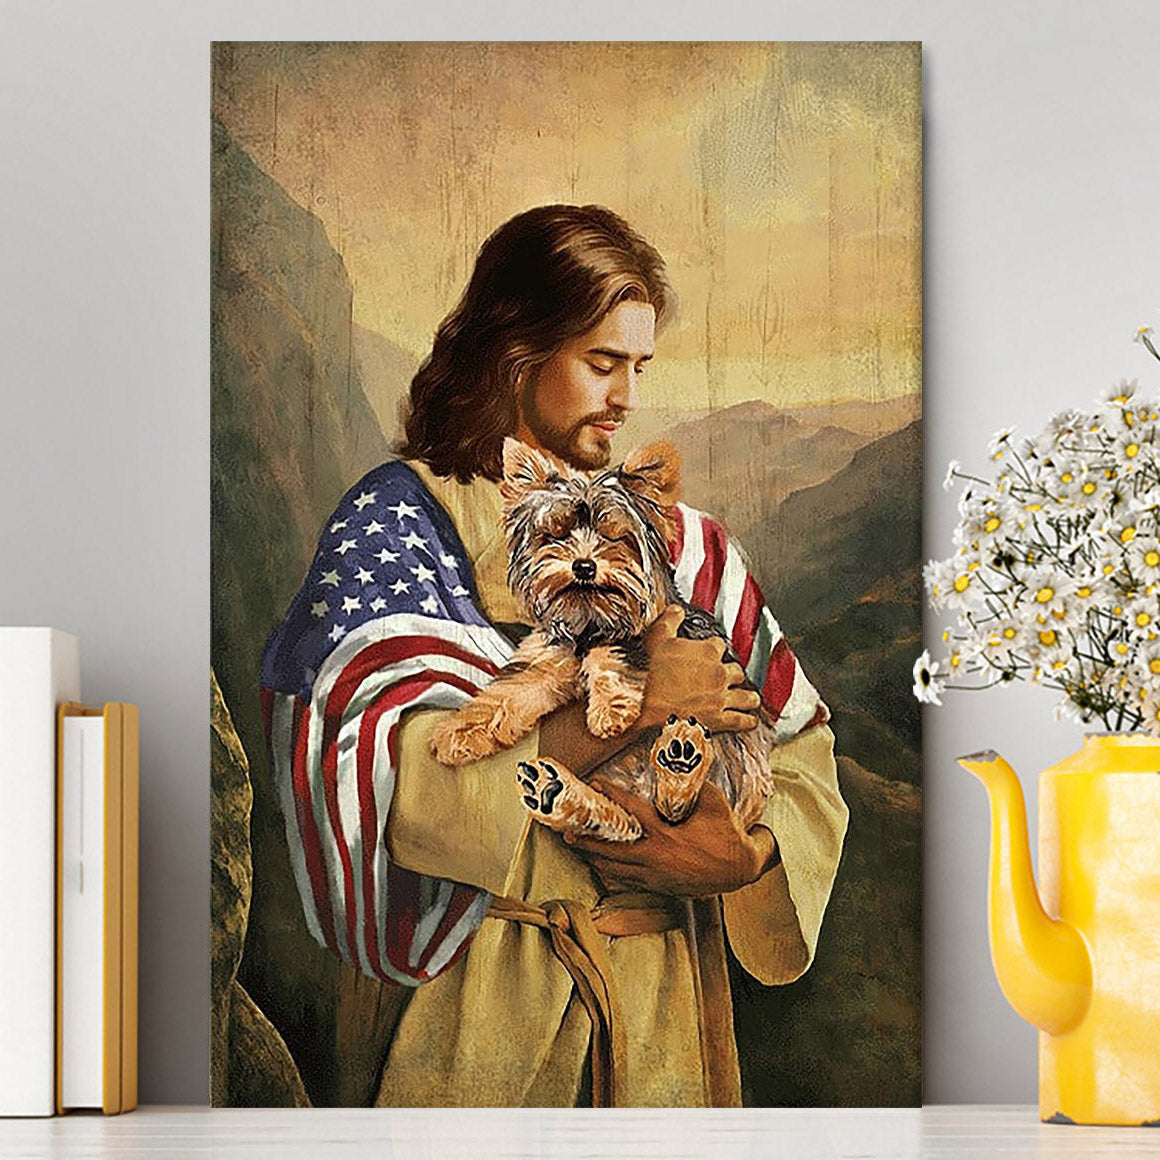 Jesus Hug Yorkshire Terrier Canvas Art - Christian Art - Bible Verse Wall Art - Religious Home Decor